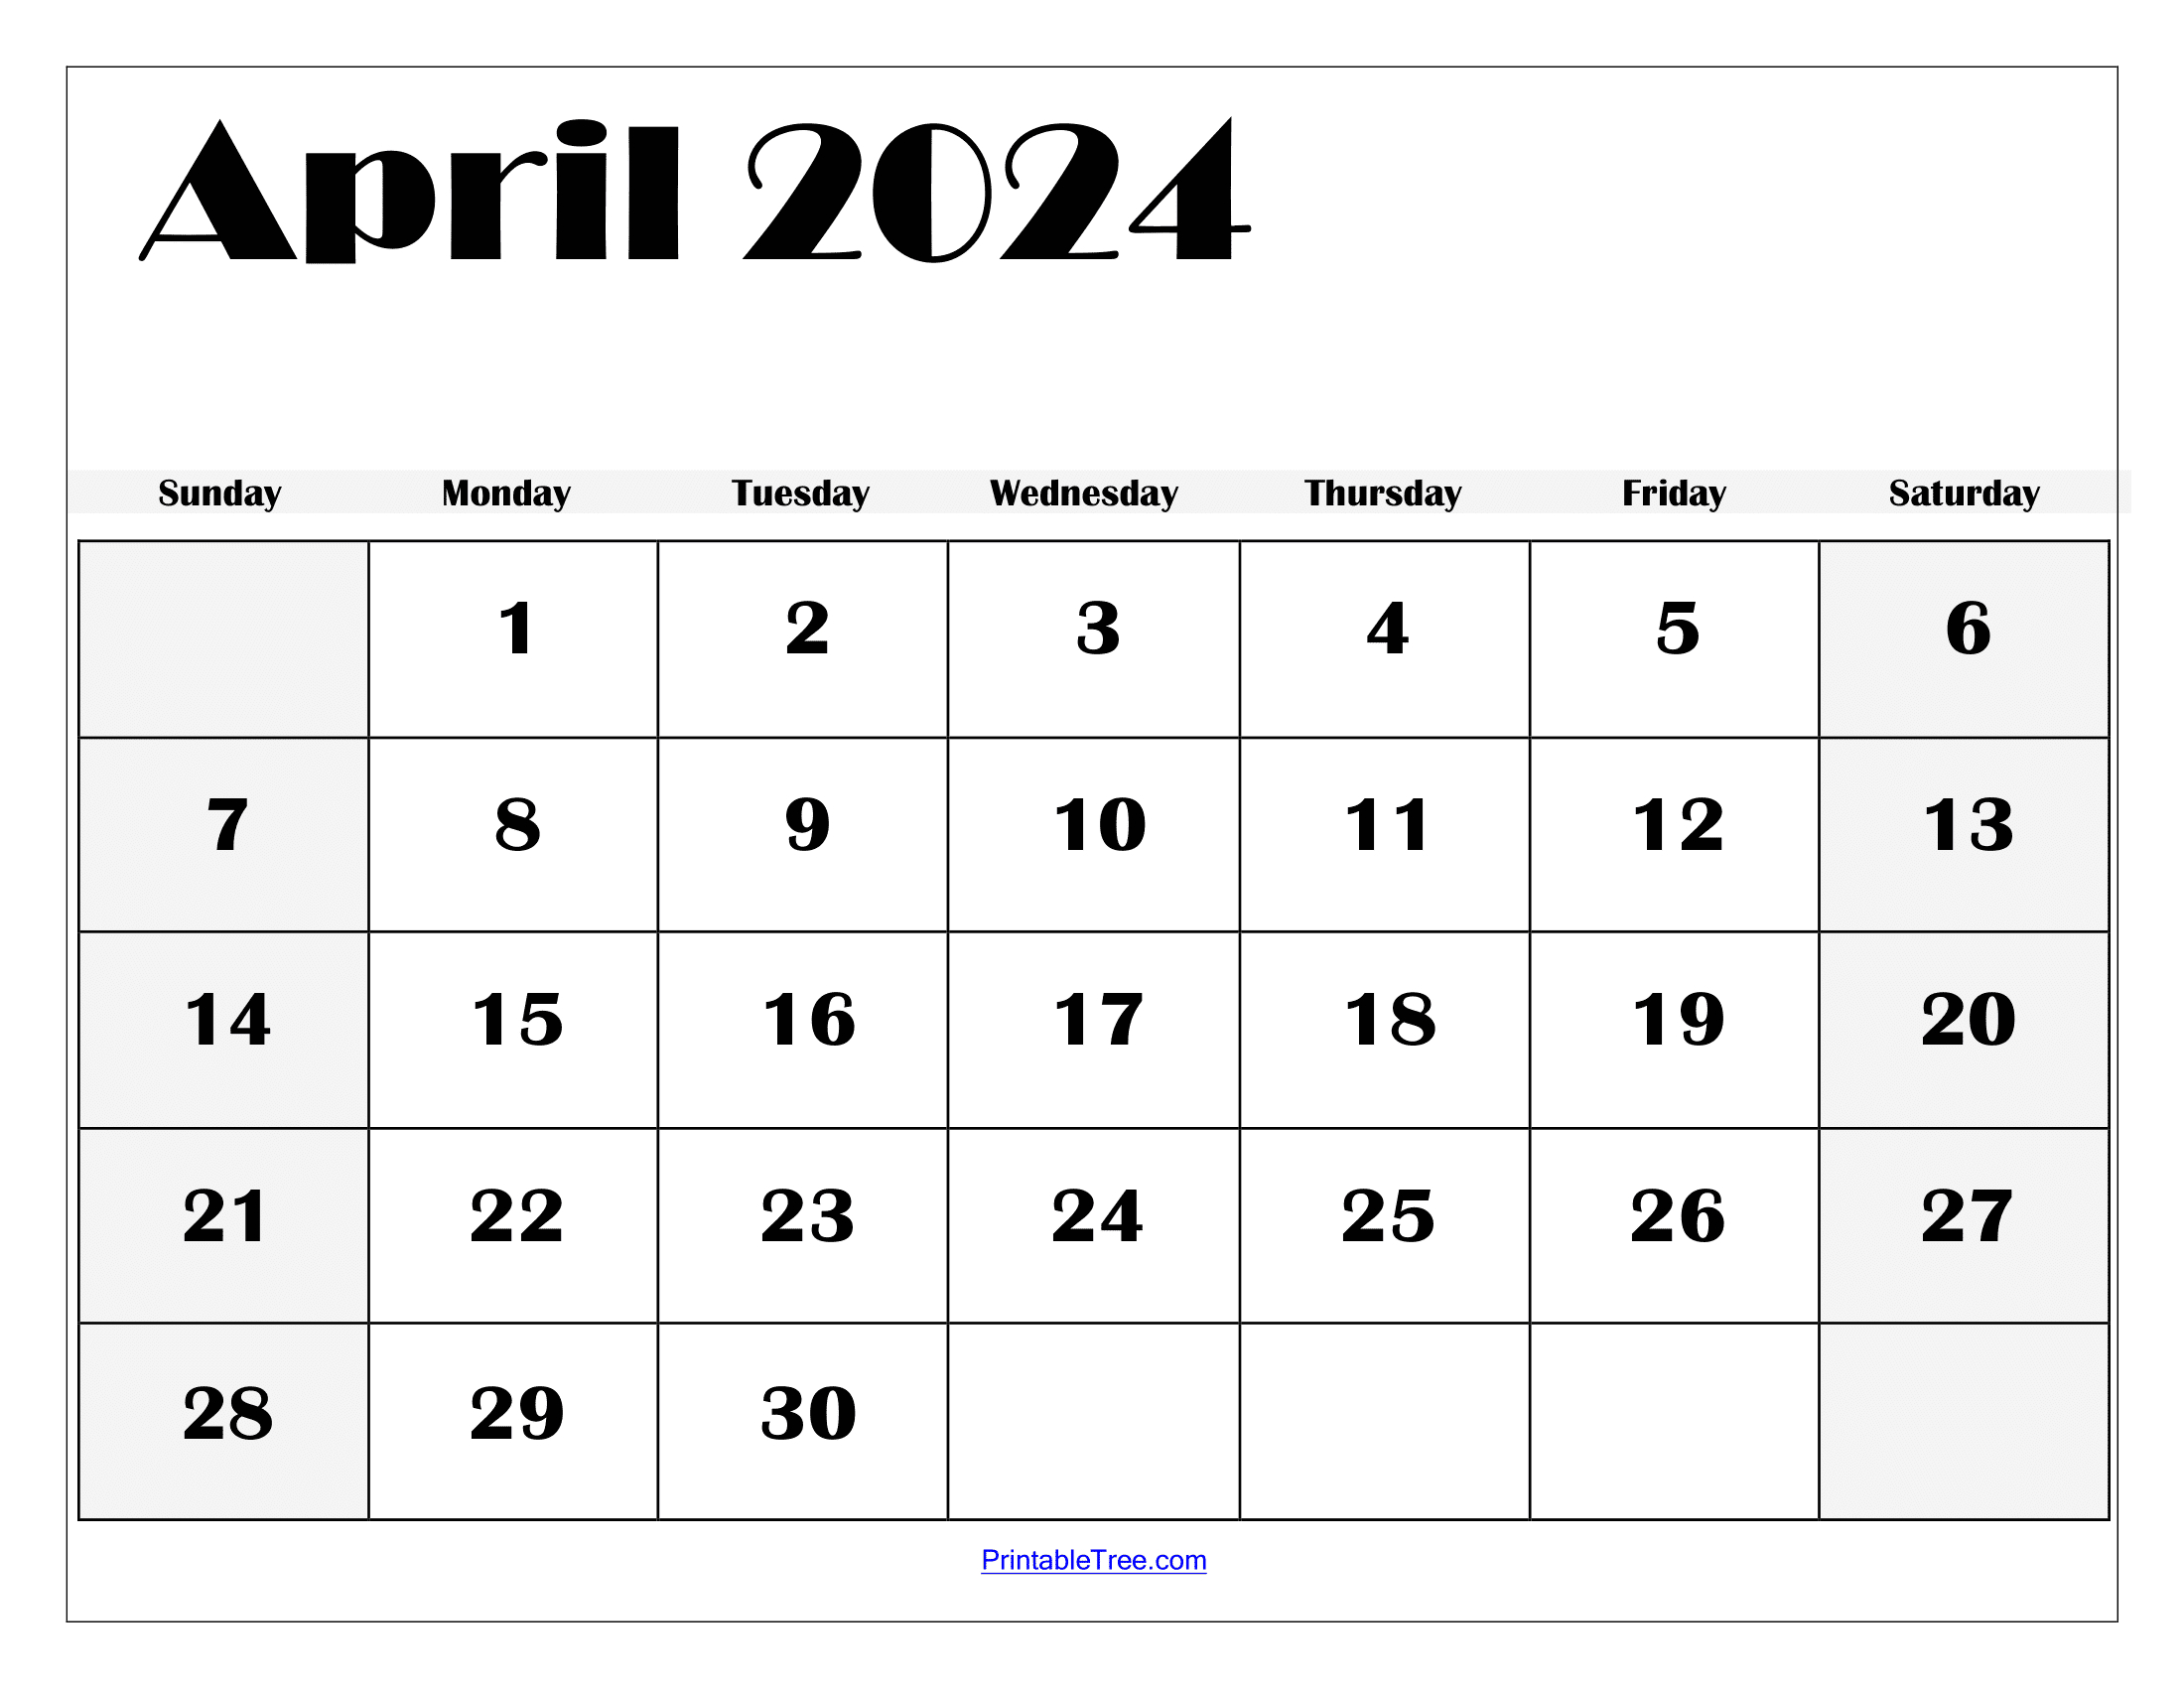 Blank April 2024 Calendar Printable Pdf Template With Holidays | Printable Calendar April 2024 To March 2025